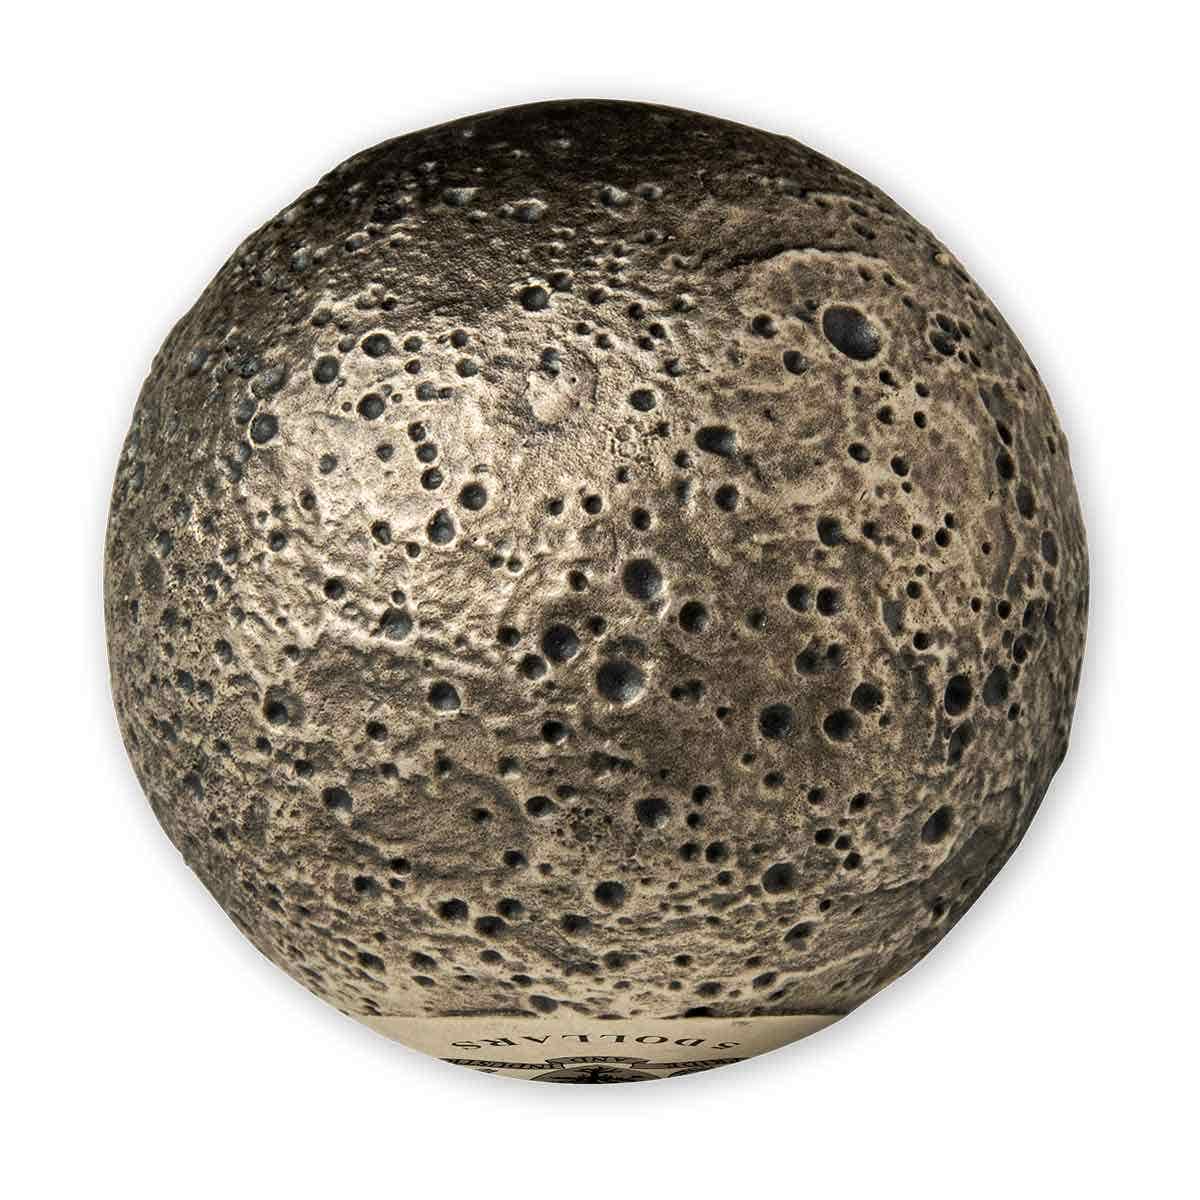 Mercury Sphere 2022 $5 1oz Silver Antiqued Coin